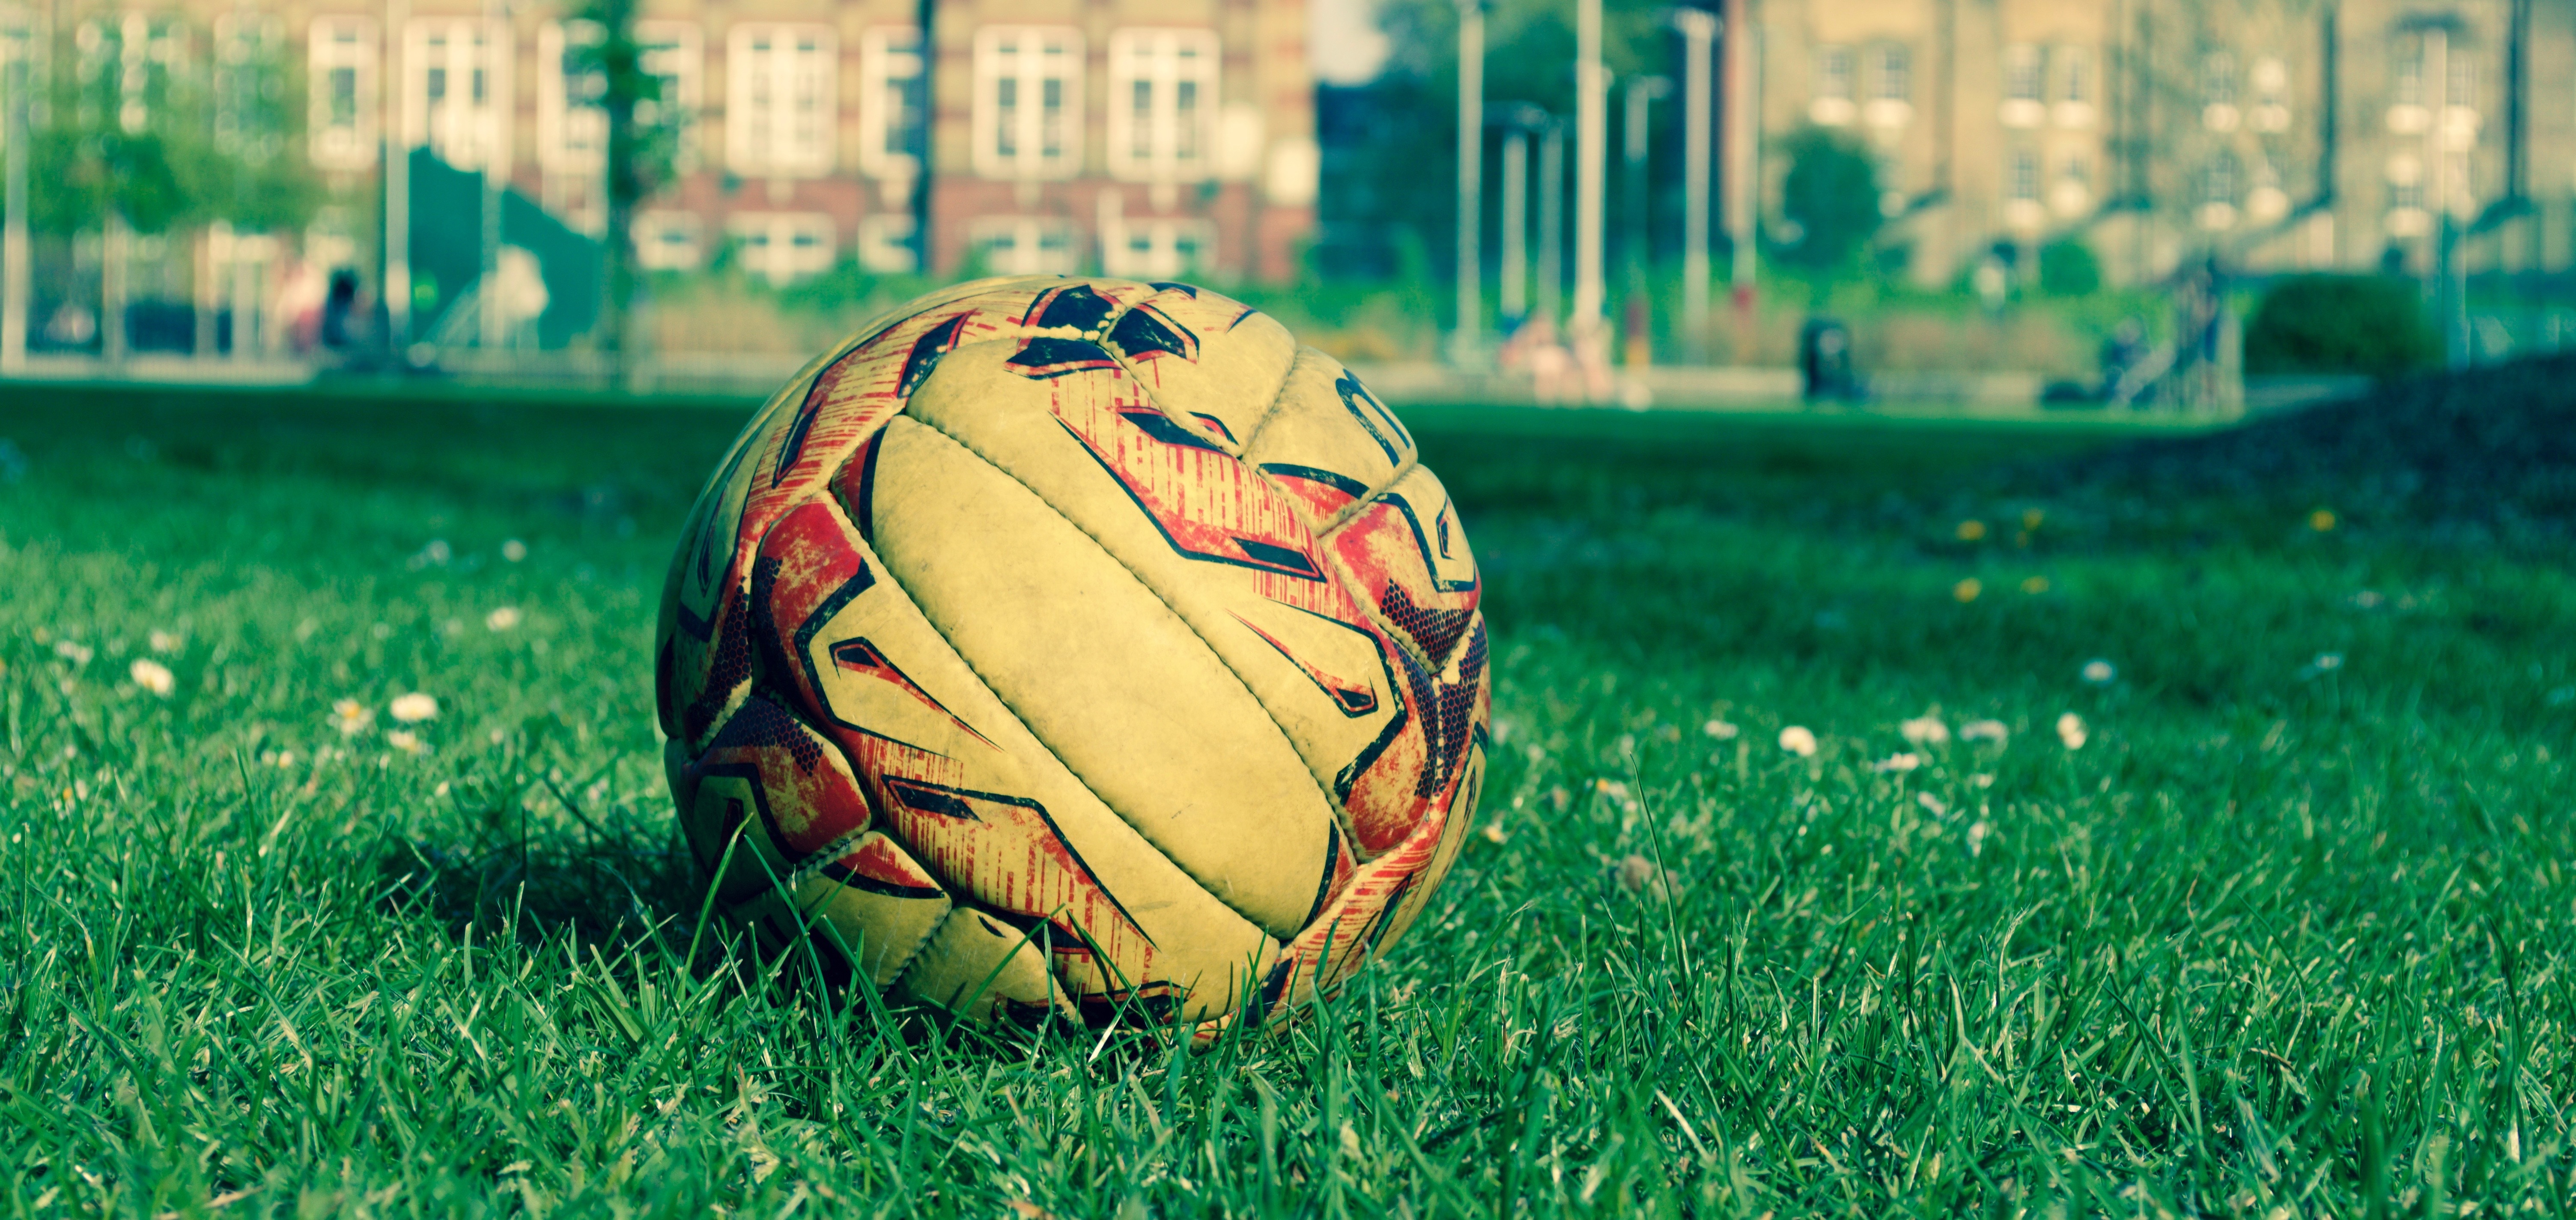 sports, grass, football, field, lawn, soccer ball